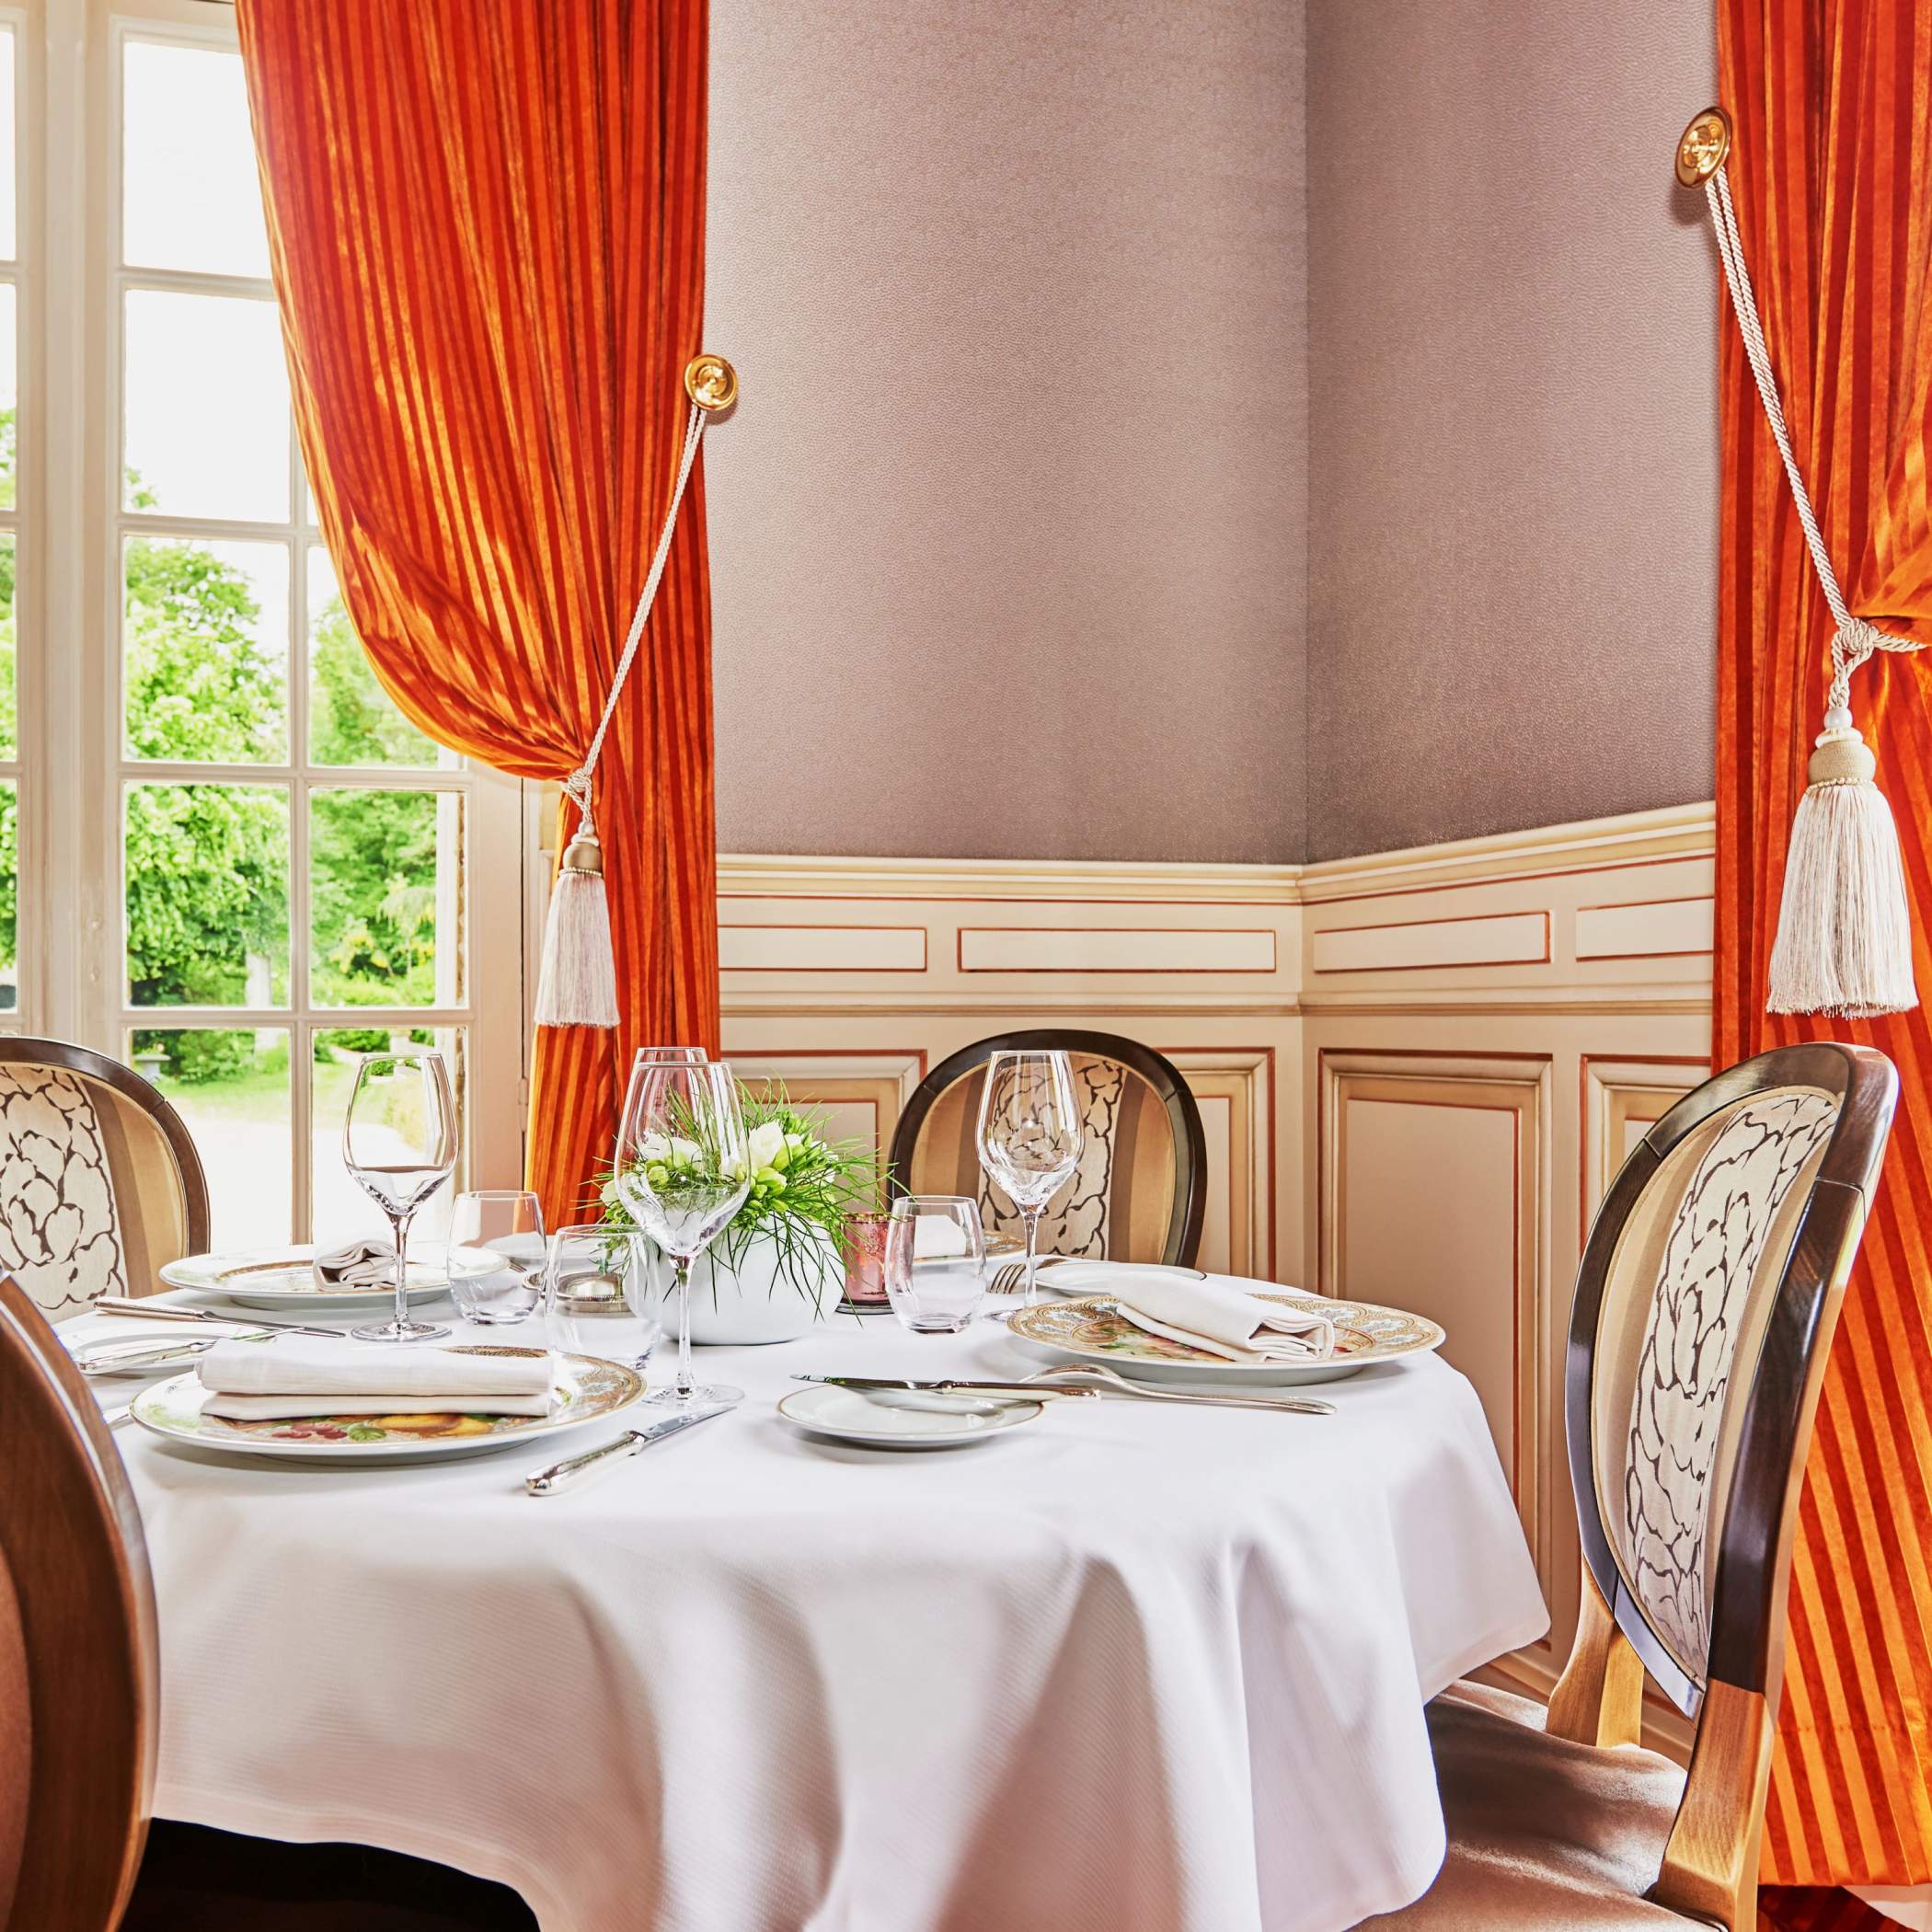 Dining room of the Château de Beaulieu, Gourmet Restaurant with terrace near Tours